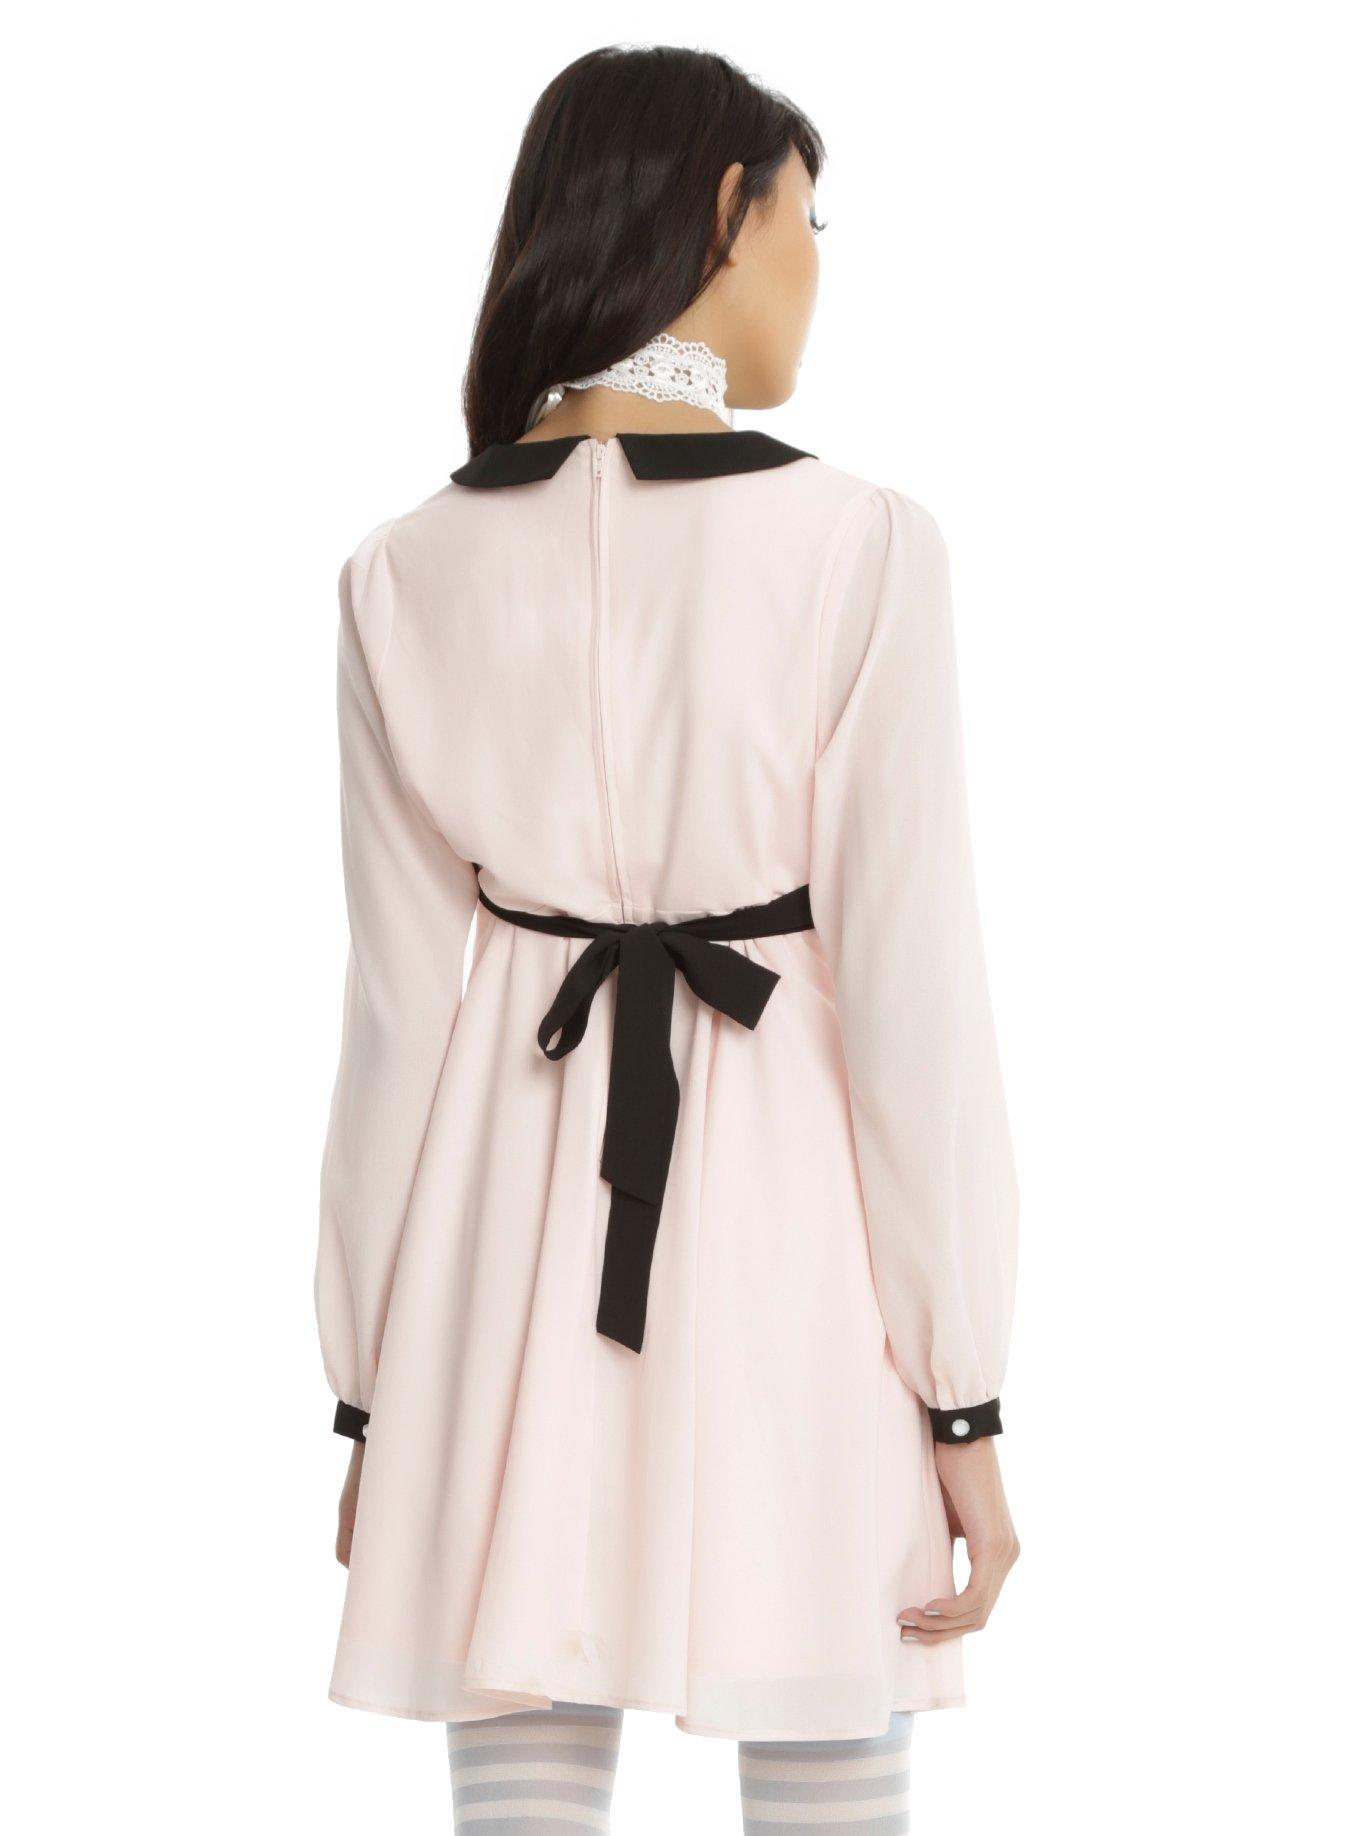 Blush & Black Collared Long-Sleeved Fit & Flare Dress, , alternate